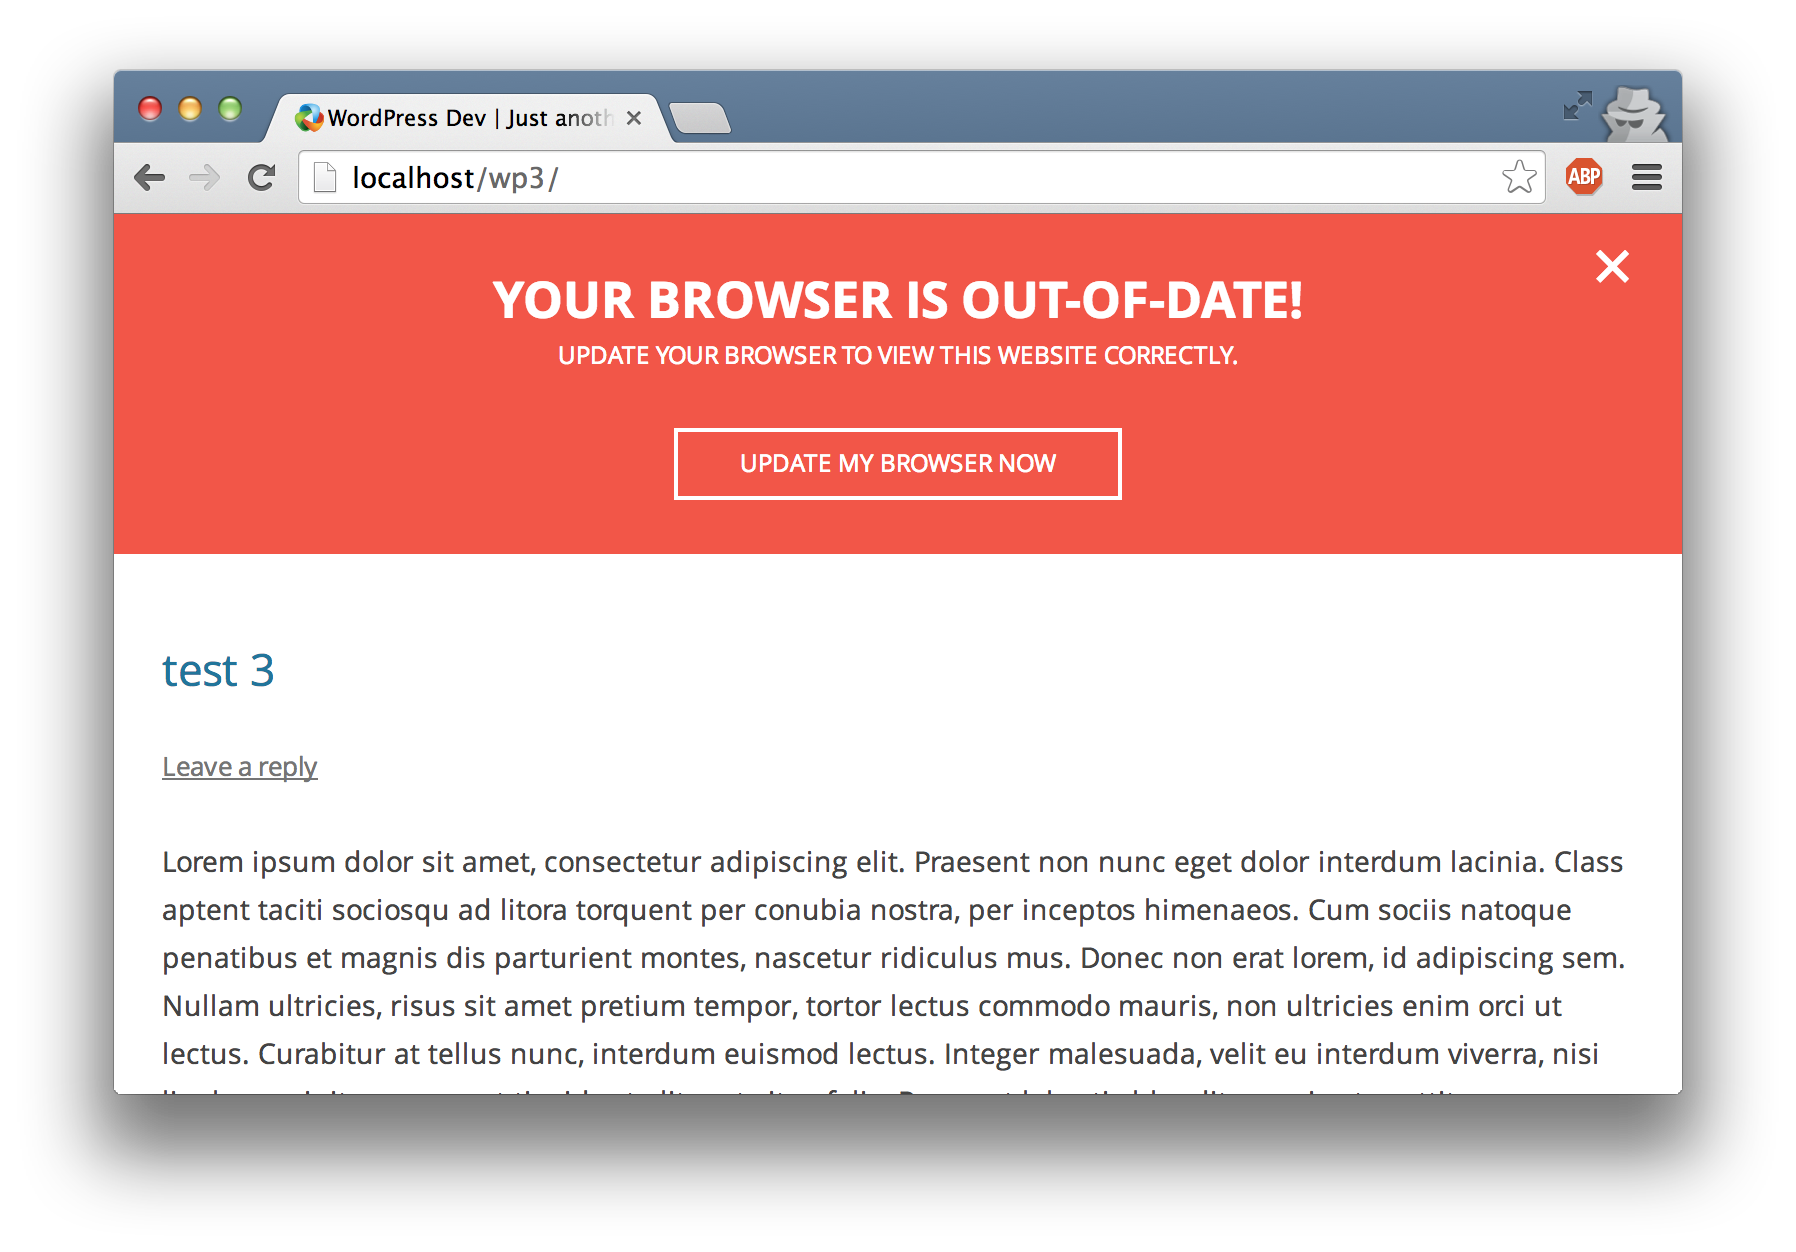 The notice for older browser